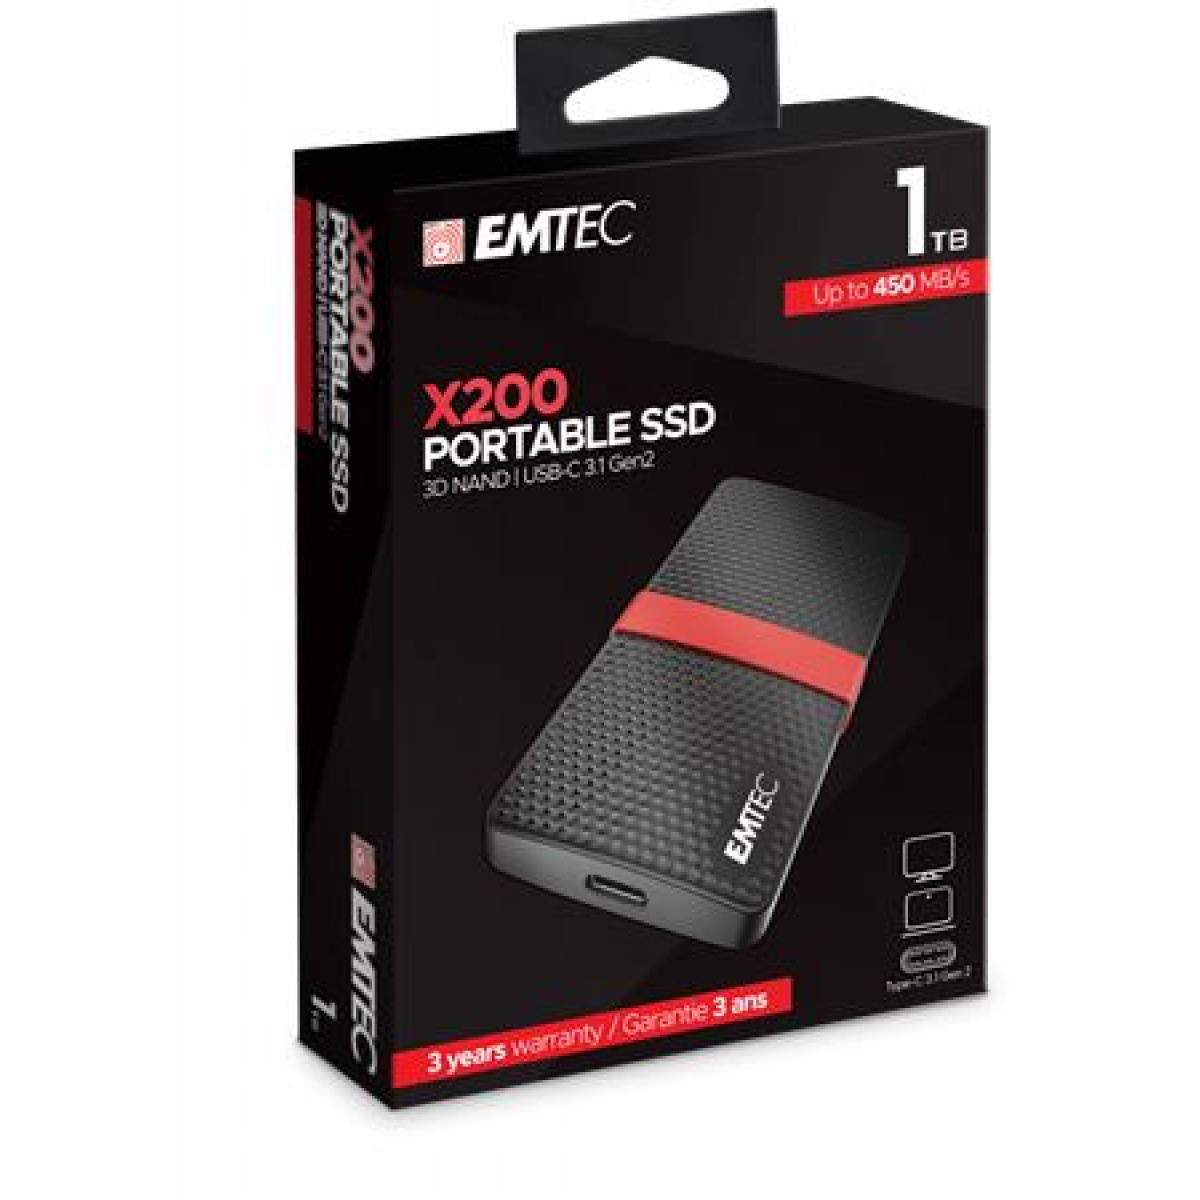 SSD (külső memória) 1TB USB 3.2 420/450 MB/s EMTEC X200